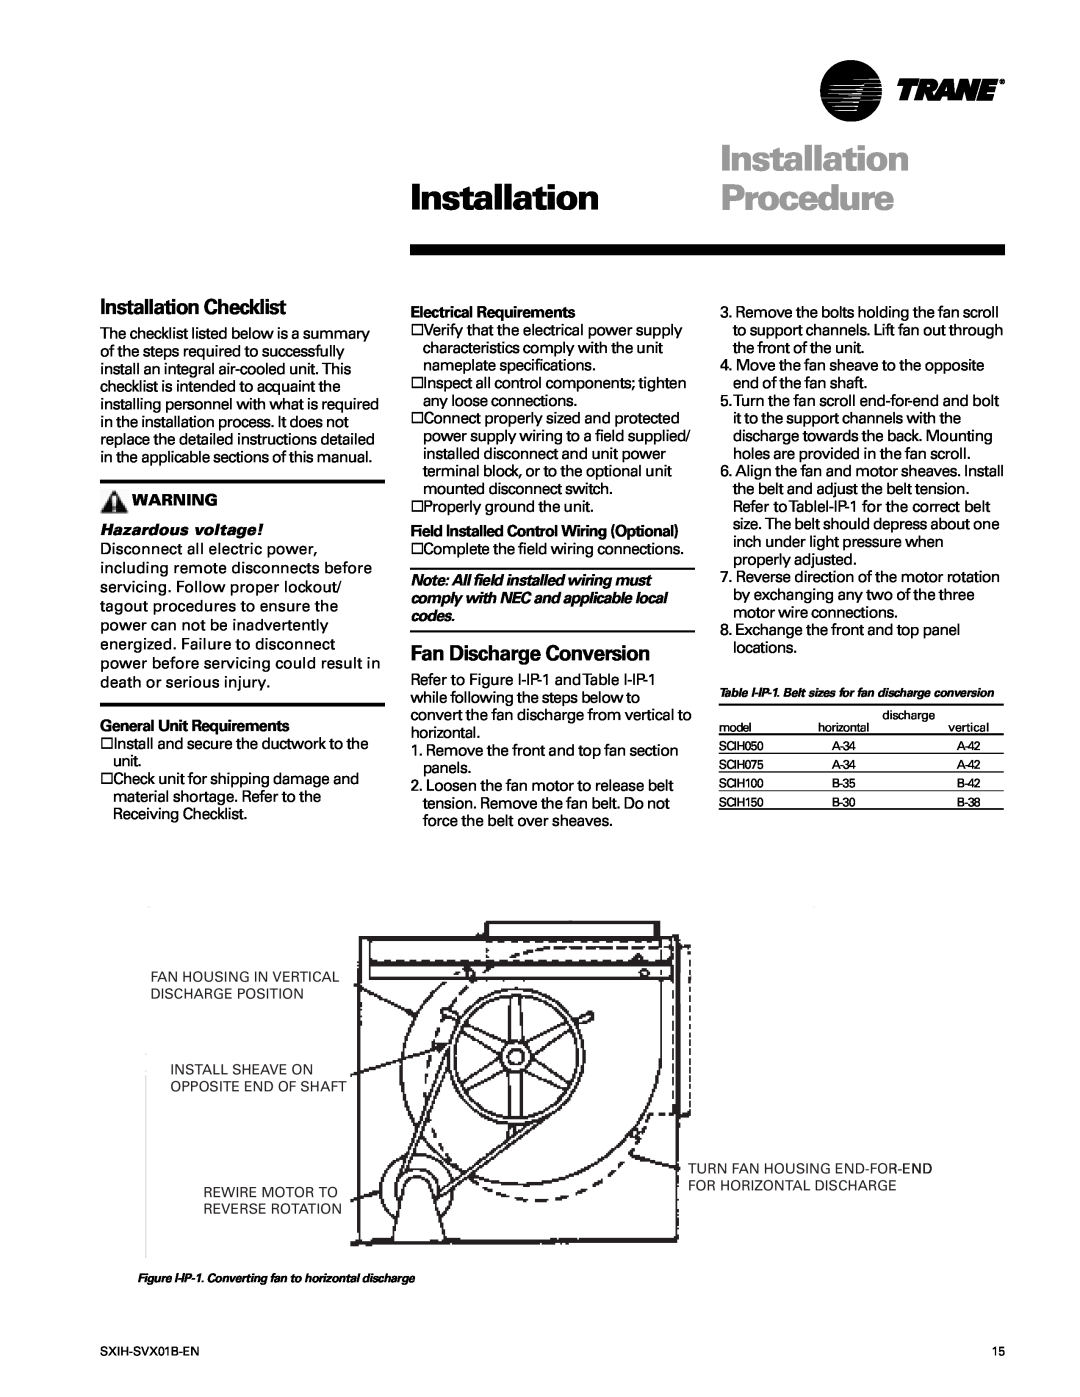 Trane SCIH manual Installation Procedure, Installation Checklist, Fan Discharge Conversion 